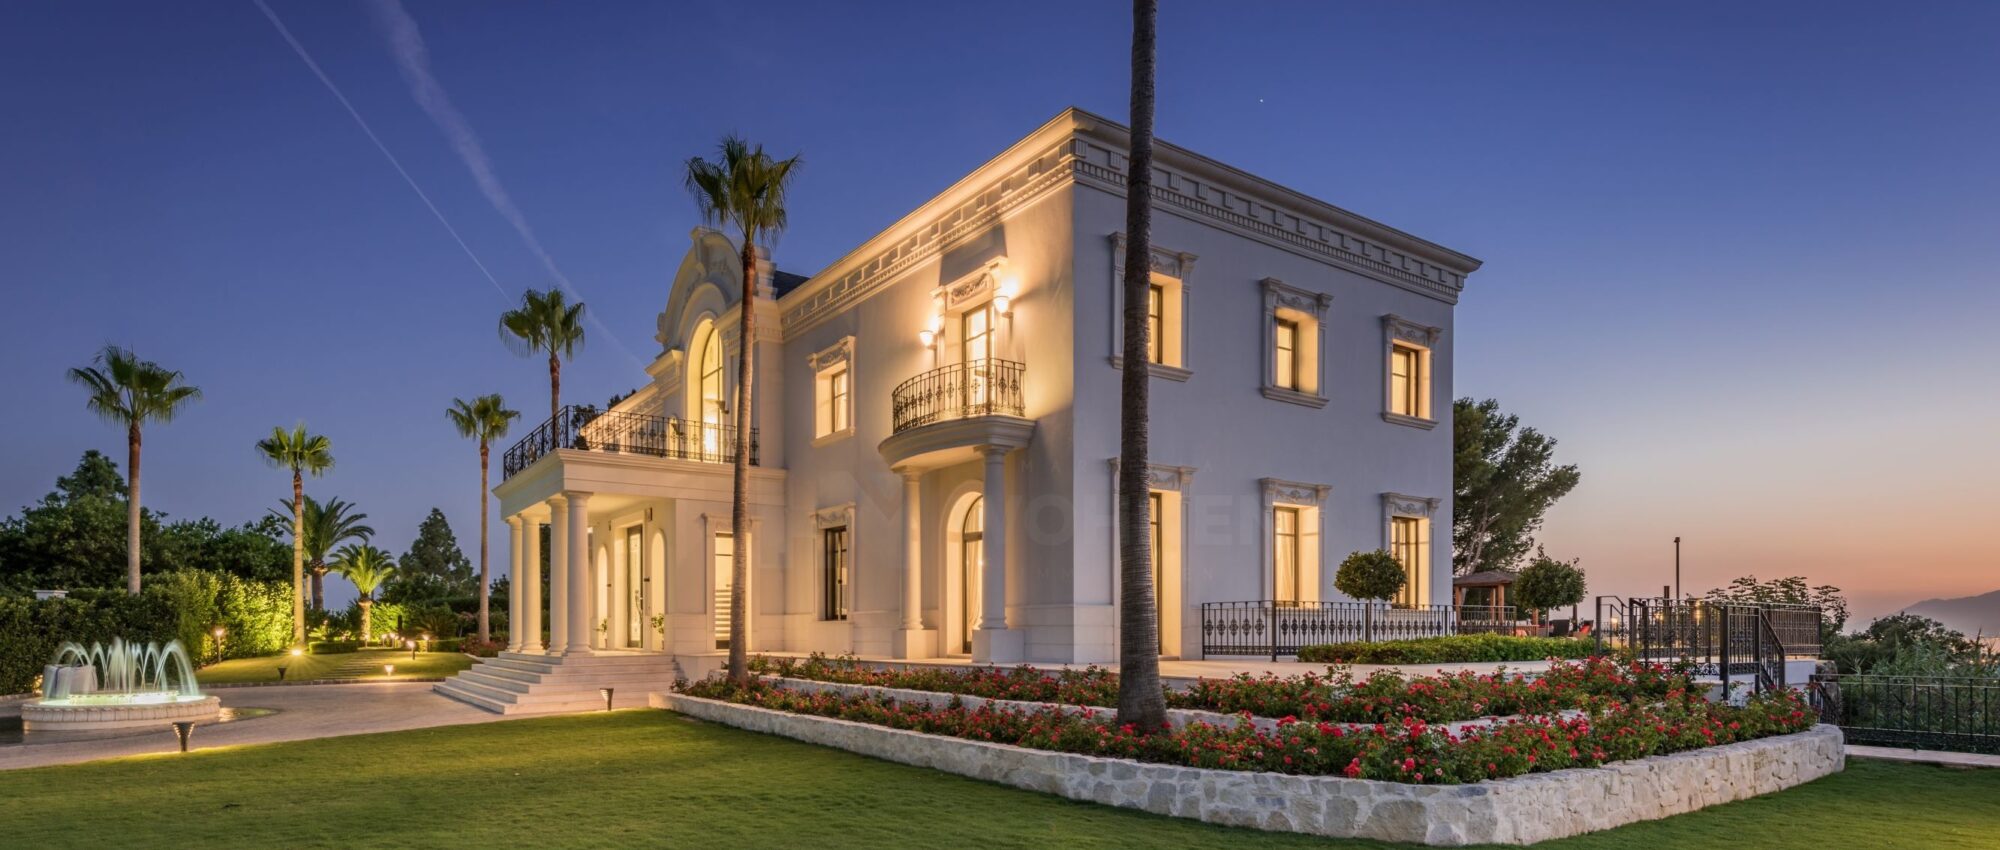 Majestic mansion overlooking the beautiful Mediterranean Sea